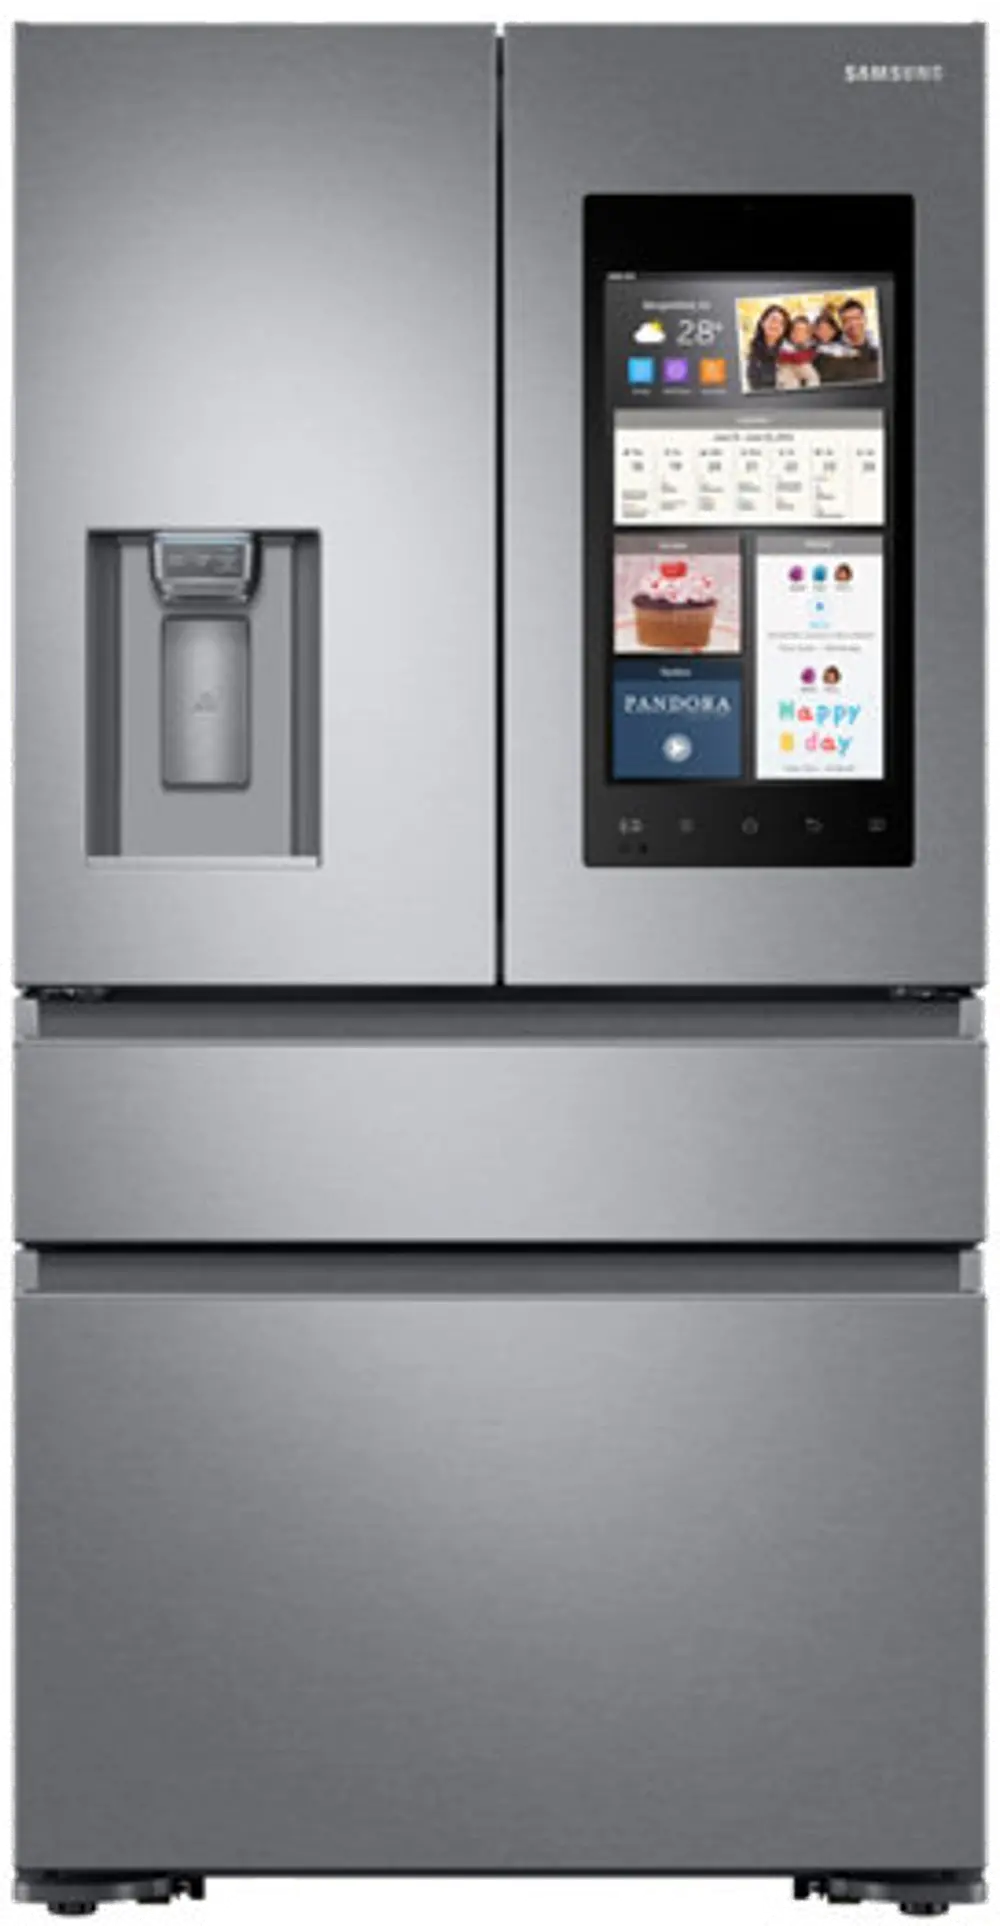 RF23M8570SR Samsung 22.2 cu ft 4 Door Refrigerator - Counter Depth Stainless Steel-1